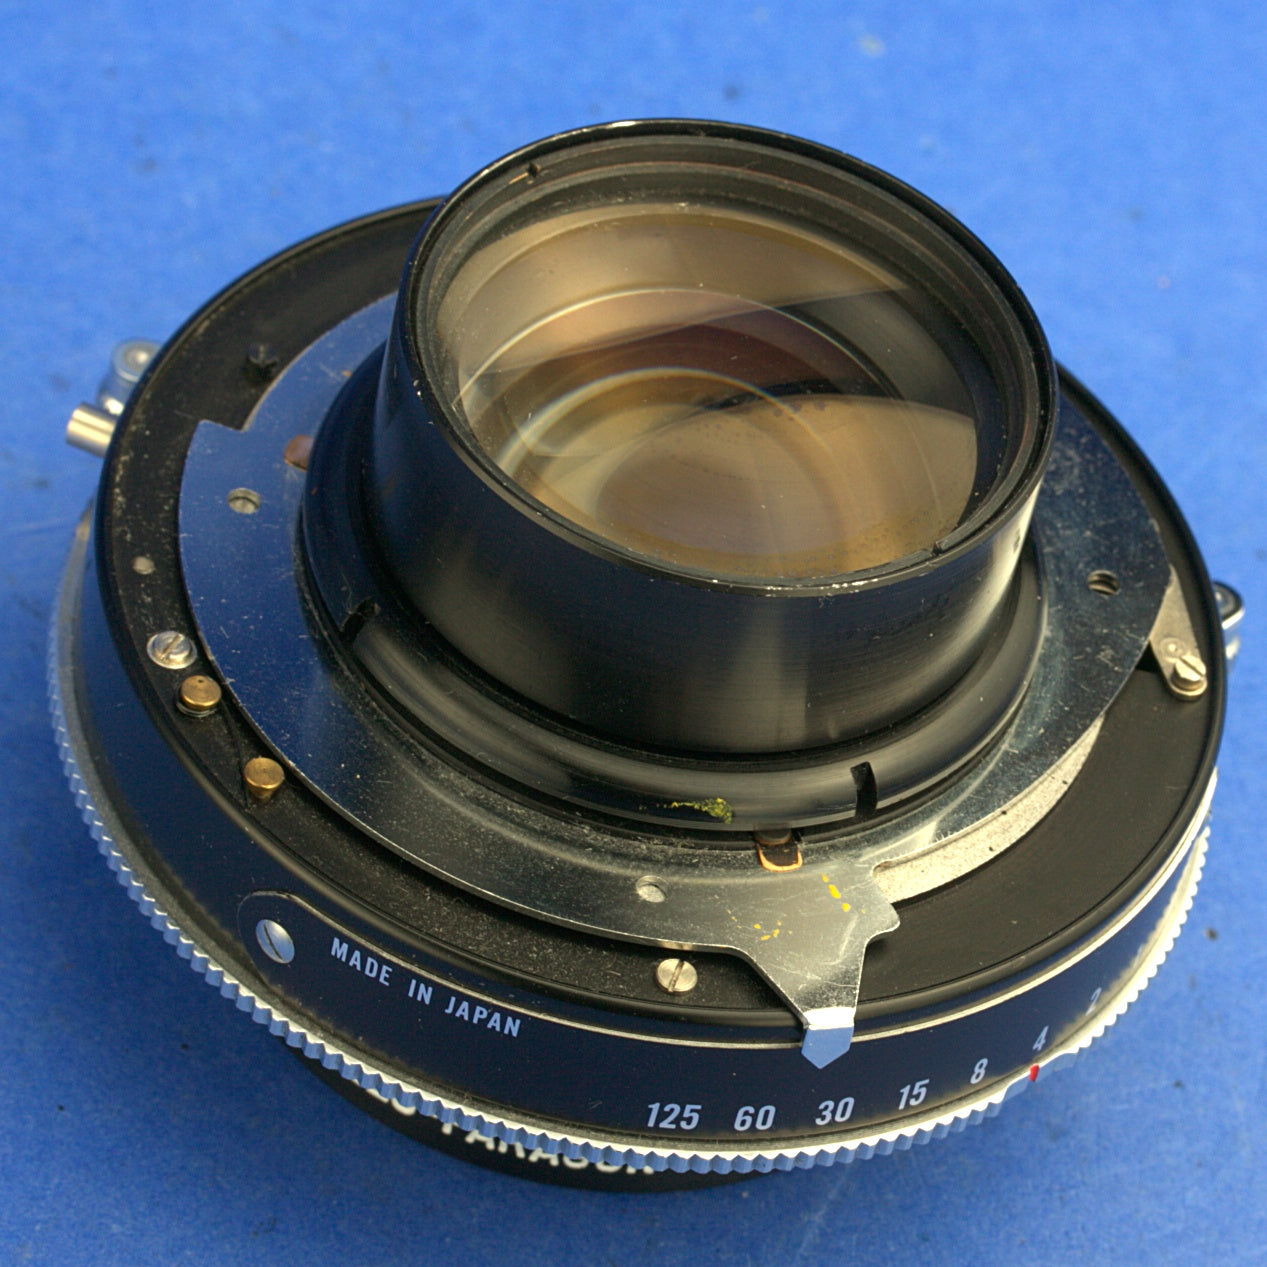 Copal Press #1 Shutter with Ilex 55mm 1.9 Lens